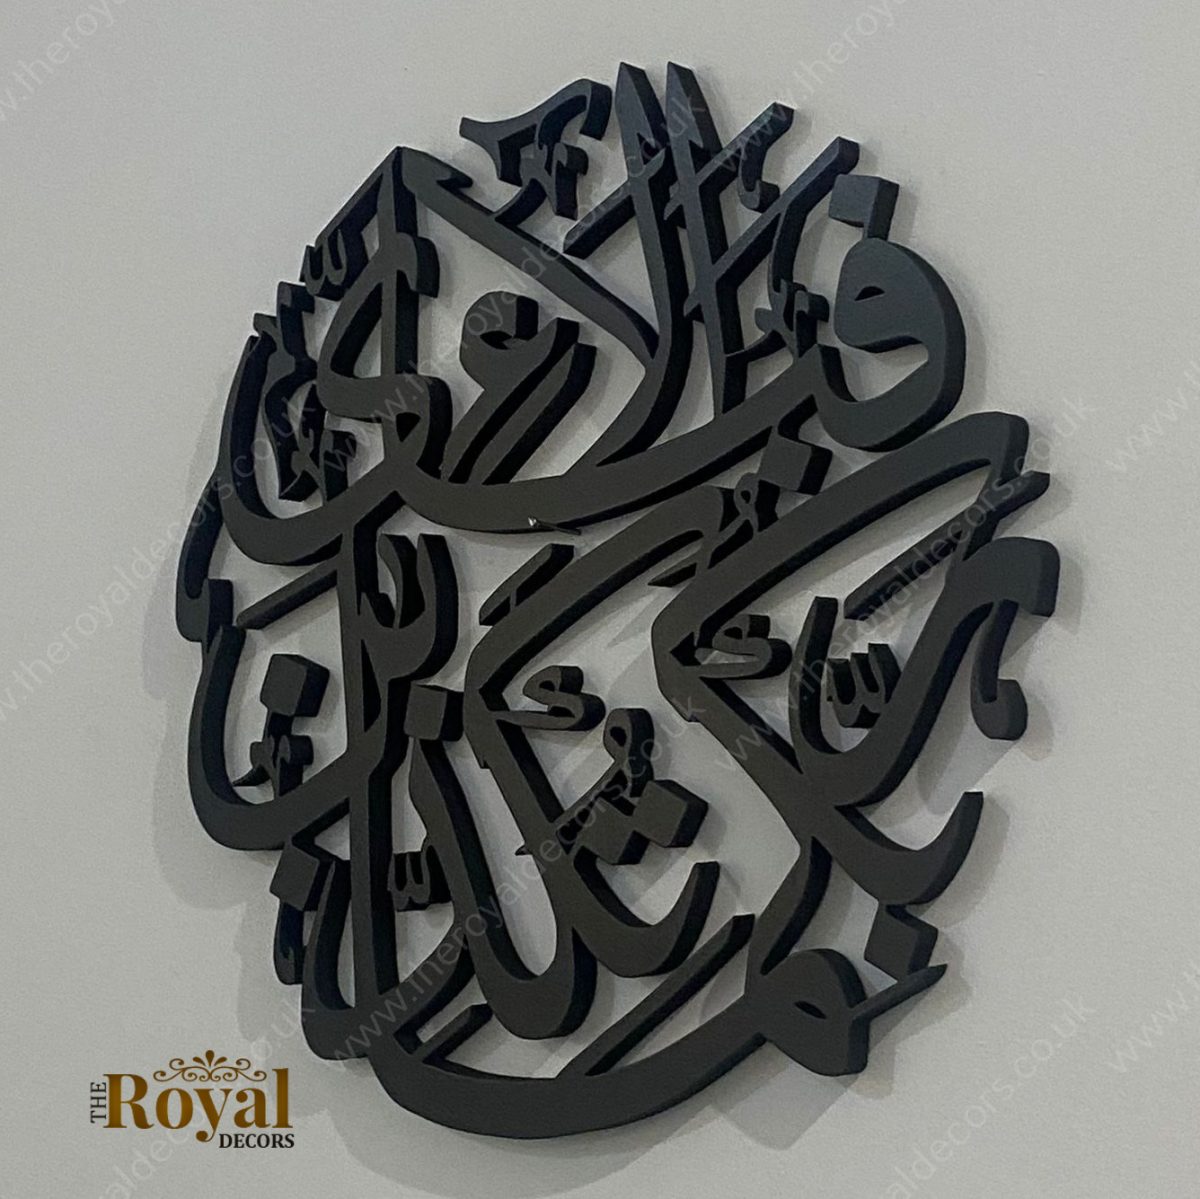 Surah Rahman Ayah Fabi ayyi ala i Rabikuma Tukaziban Islamic Calligraphy Wall Art 17.04.22